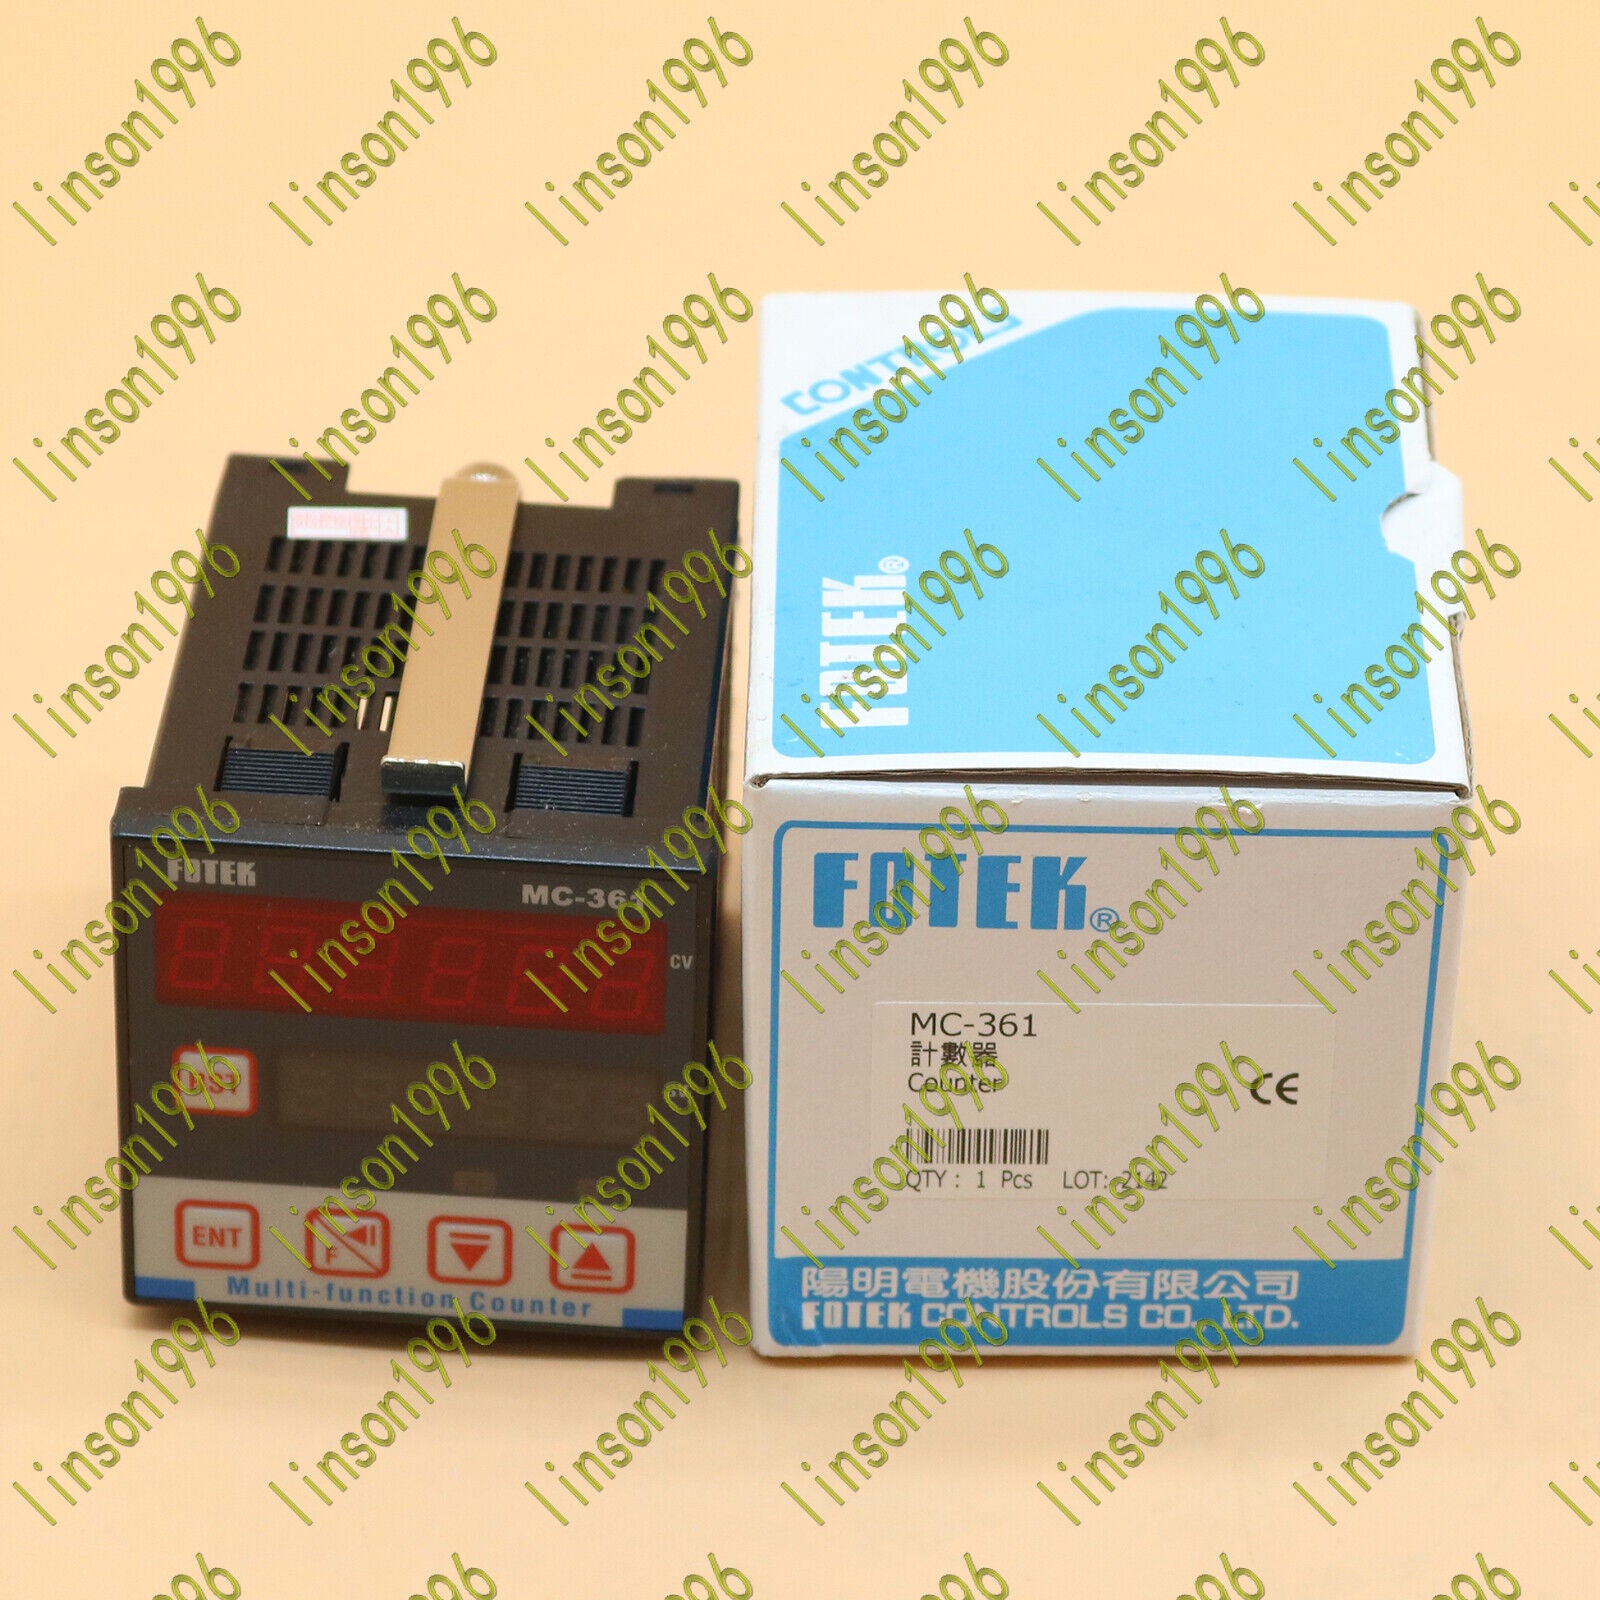 new  In Box FOTEK MC-361 MC361 Counter Fast Delivery